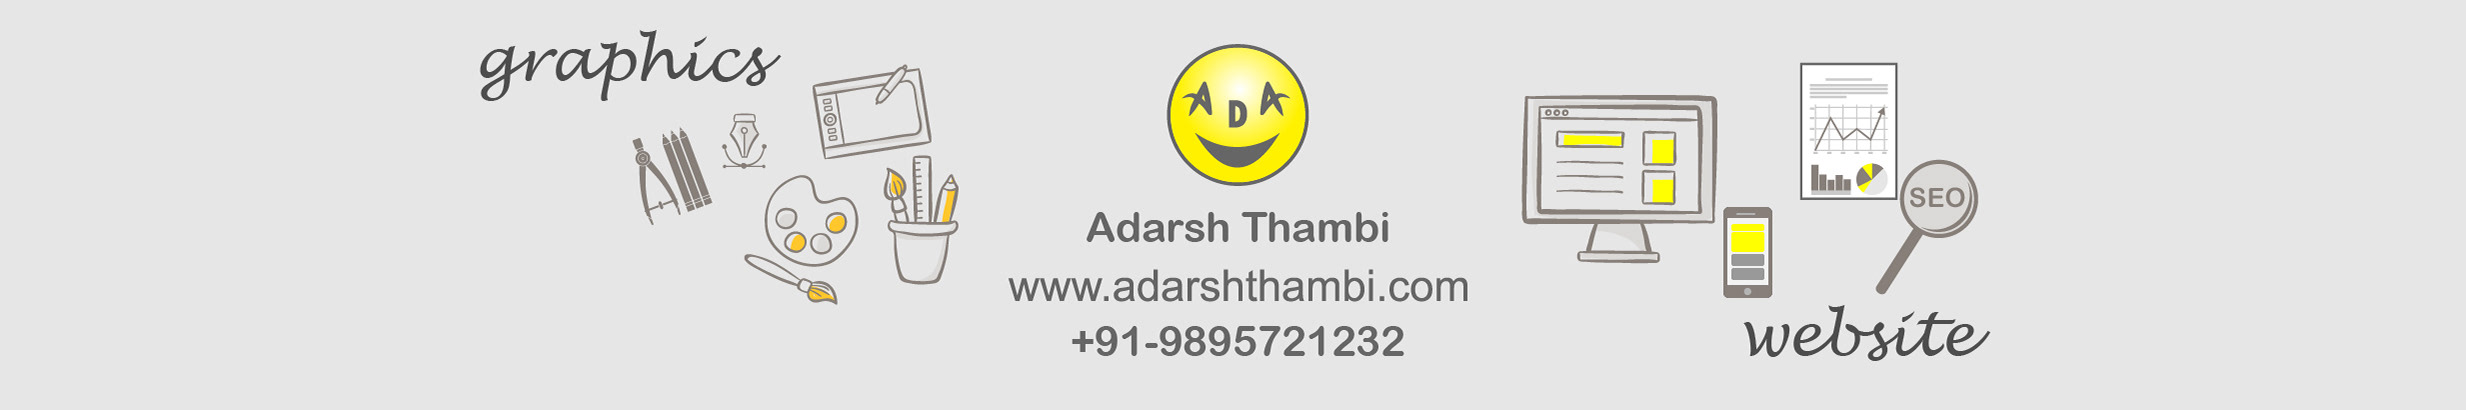 Adarsh Thambi's profile banner